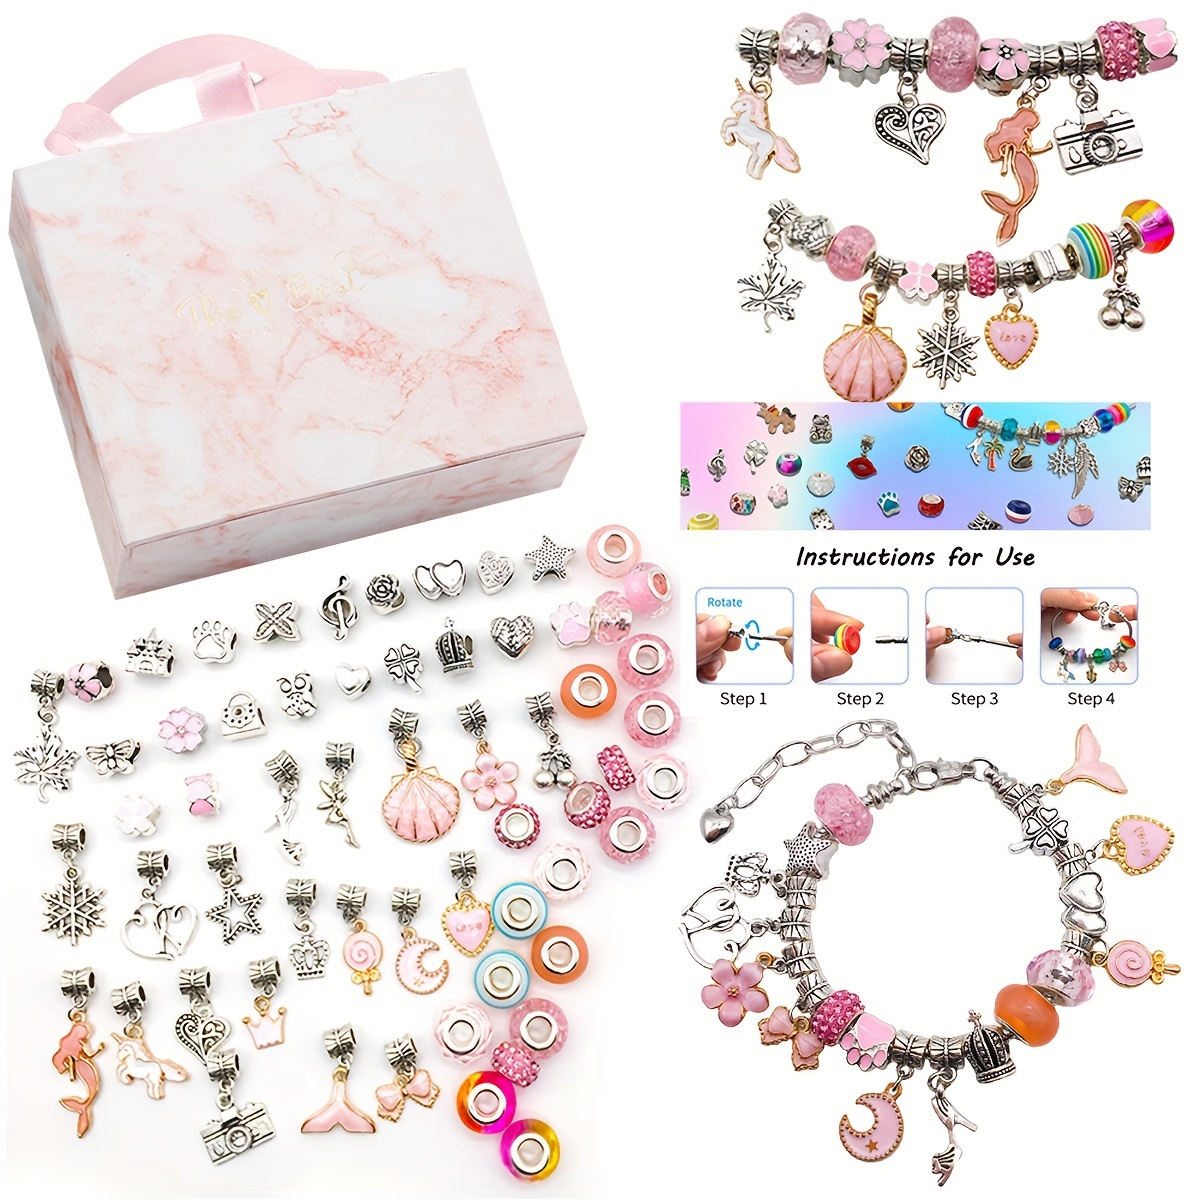 2CFun Bracelet Making Kit for Girls 85pcs Charm Bracelets Kit with Beads Jewelry Charms Bracelets for DIY Craft Jewelry Gift for Teen Girls, Size: One Size